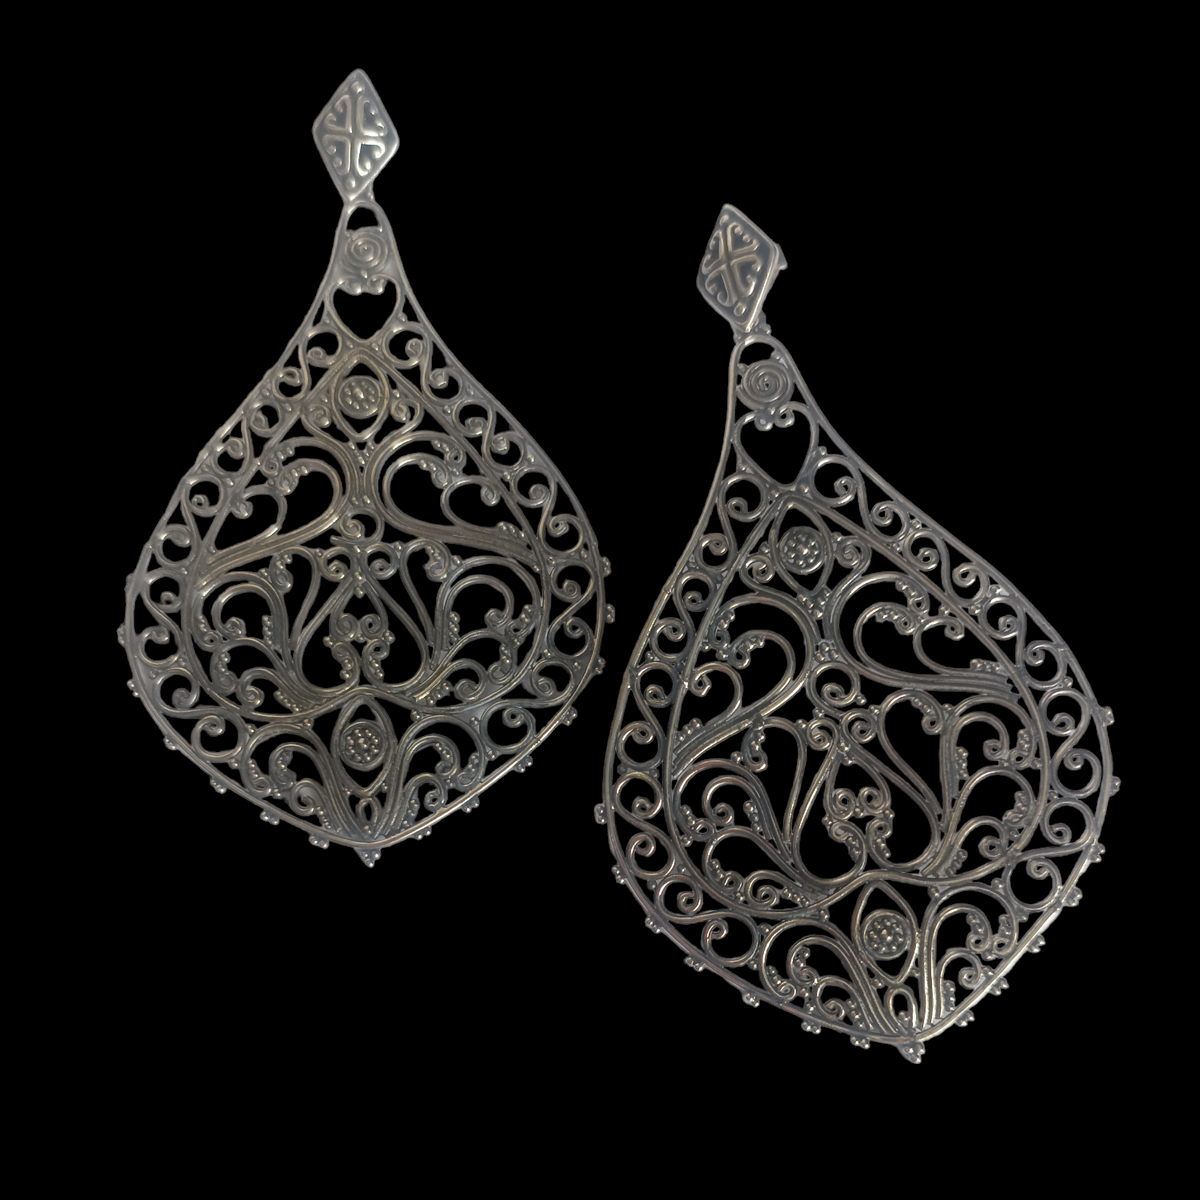 Handcrafted filigree earrings